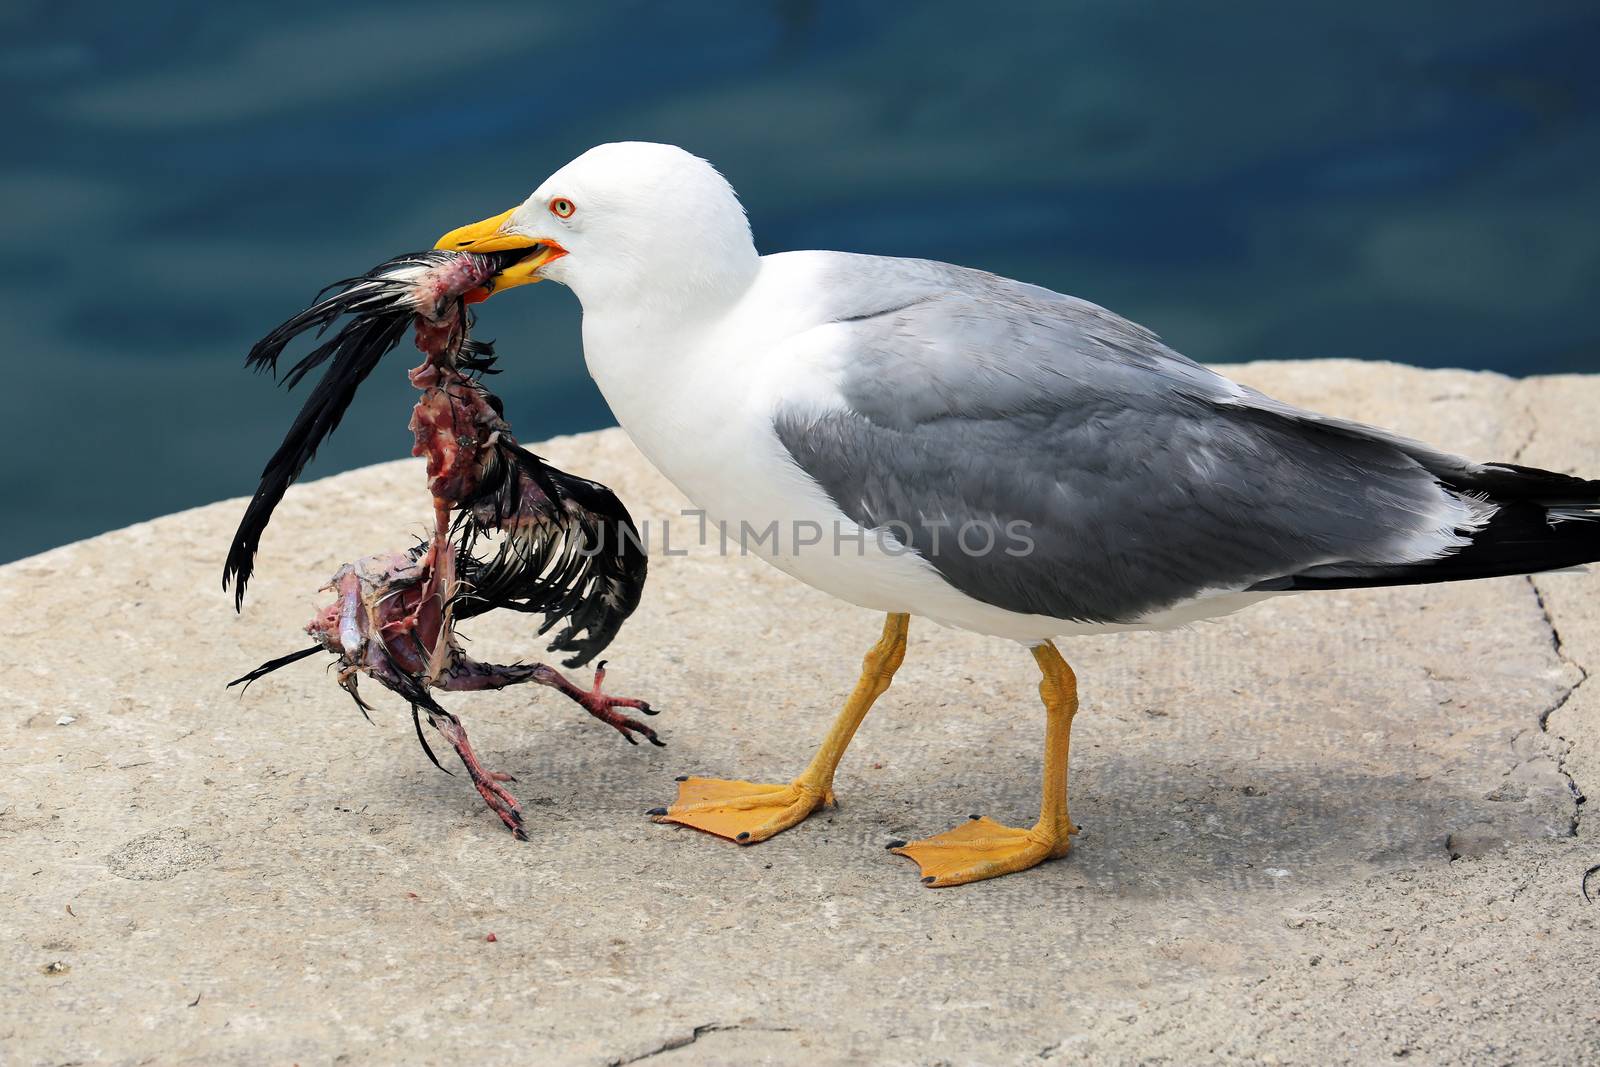 Closeup of a Seagull Holding a Dead Bird in its Beak